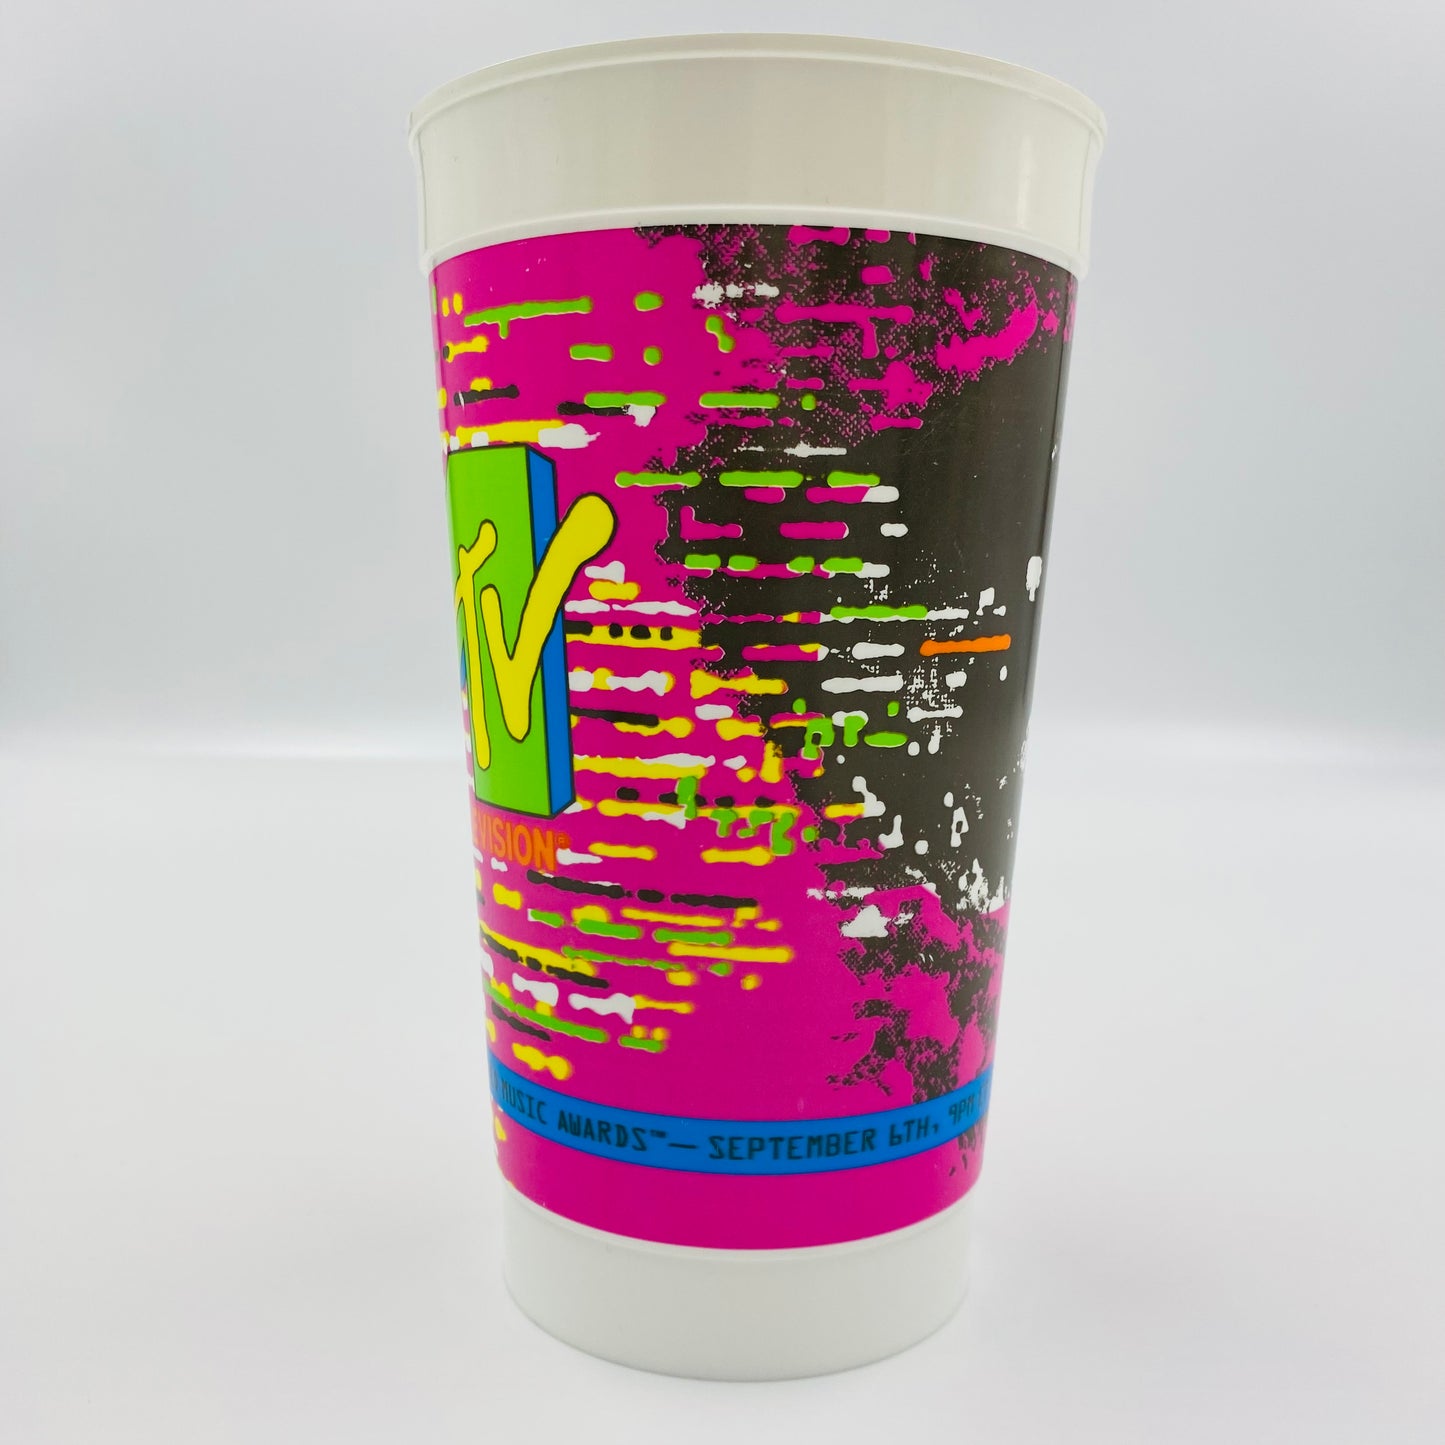 MTV VMA’s Video Music Awards purple  32oz  plastic cup (1990)Taco Bell